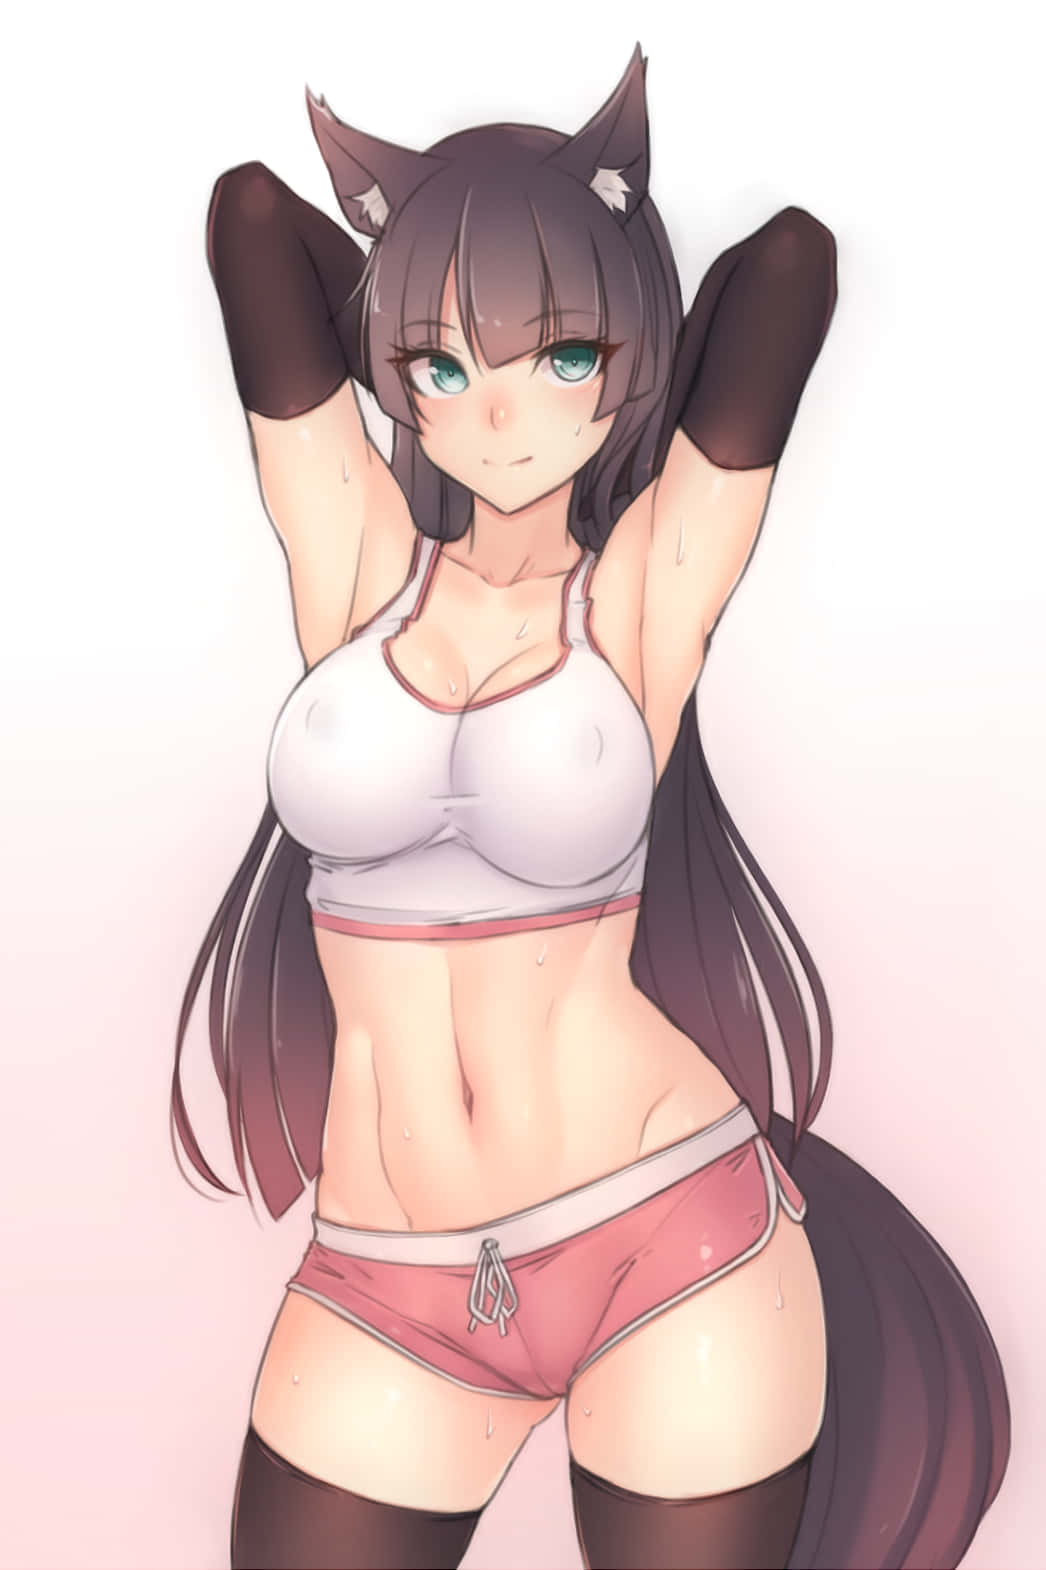 Hot Anime Cat Girl Workout Wallpaper